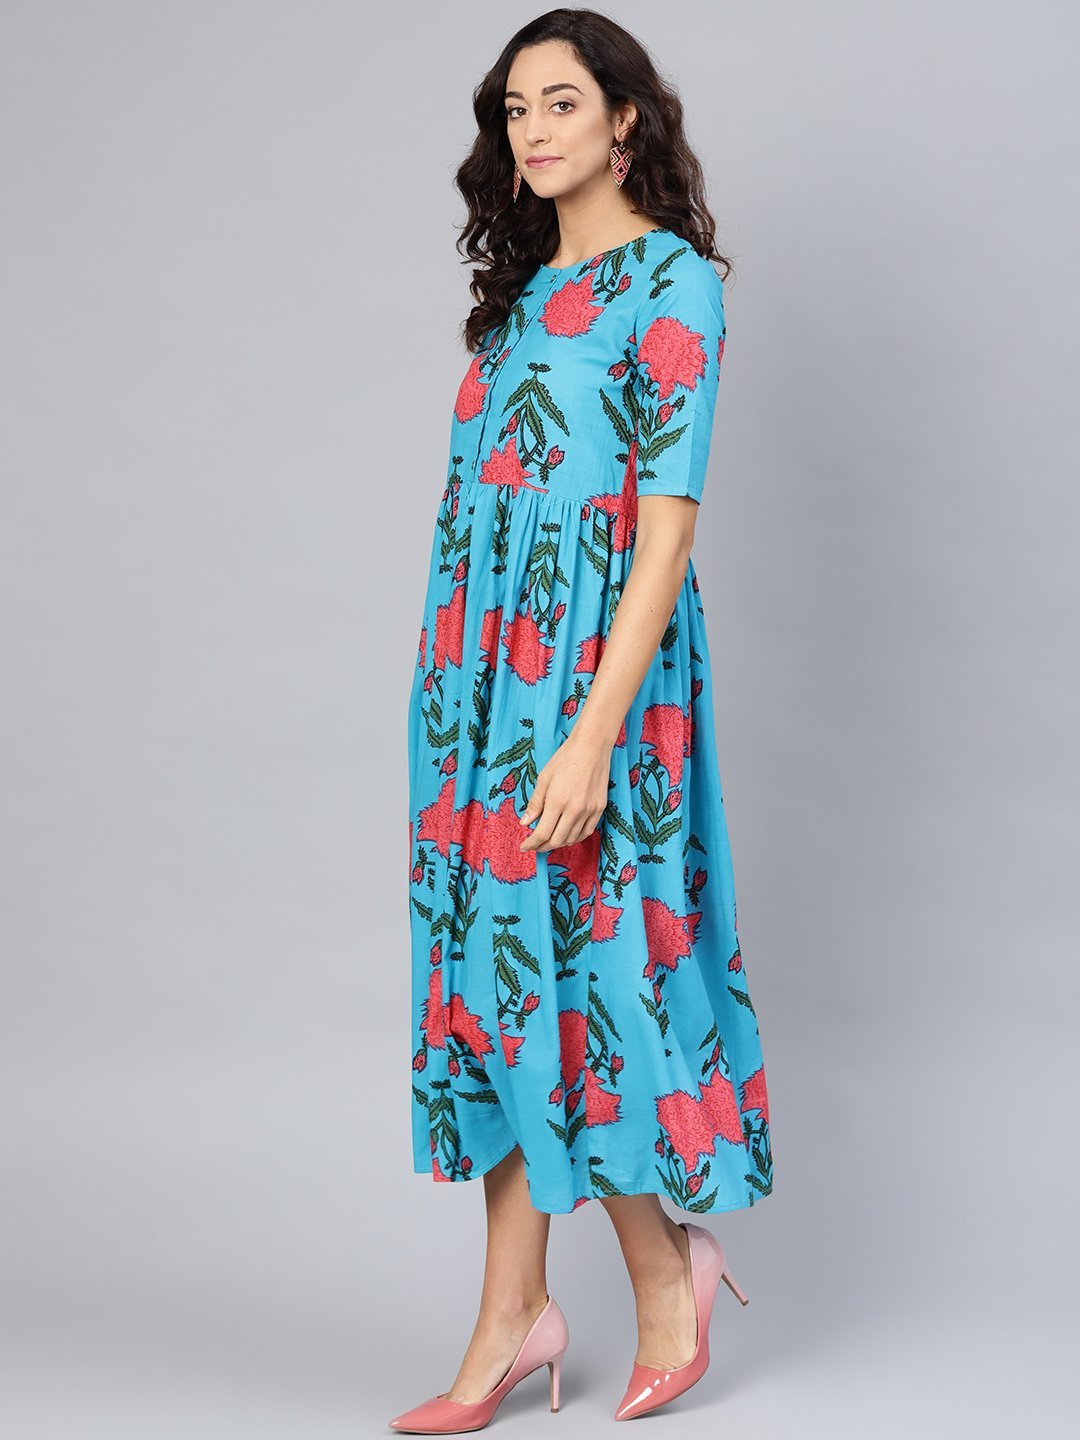 Women's Sky Blue Cotton Printed 3/4 Sleeve Round Neck Dress - Myshka